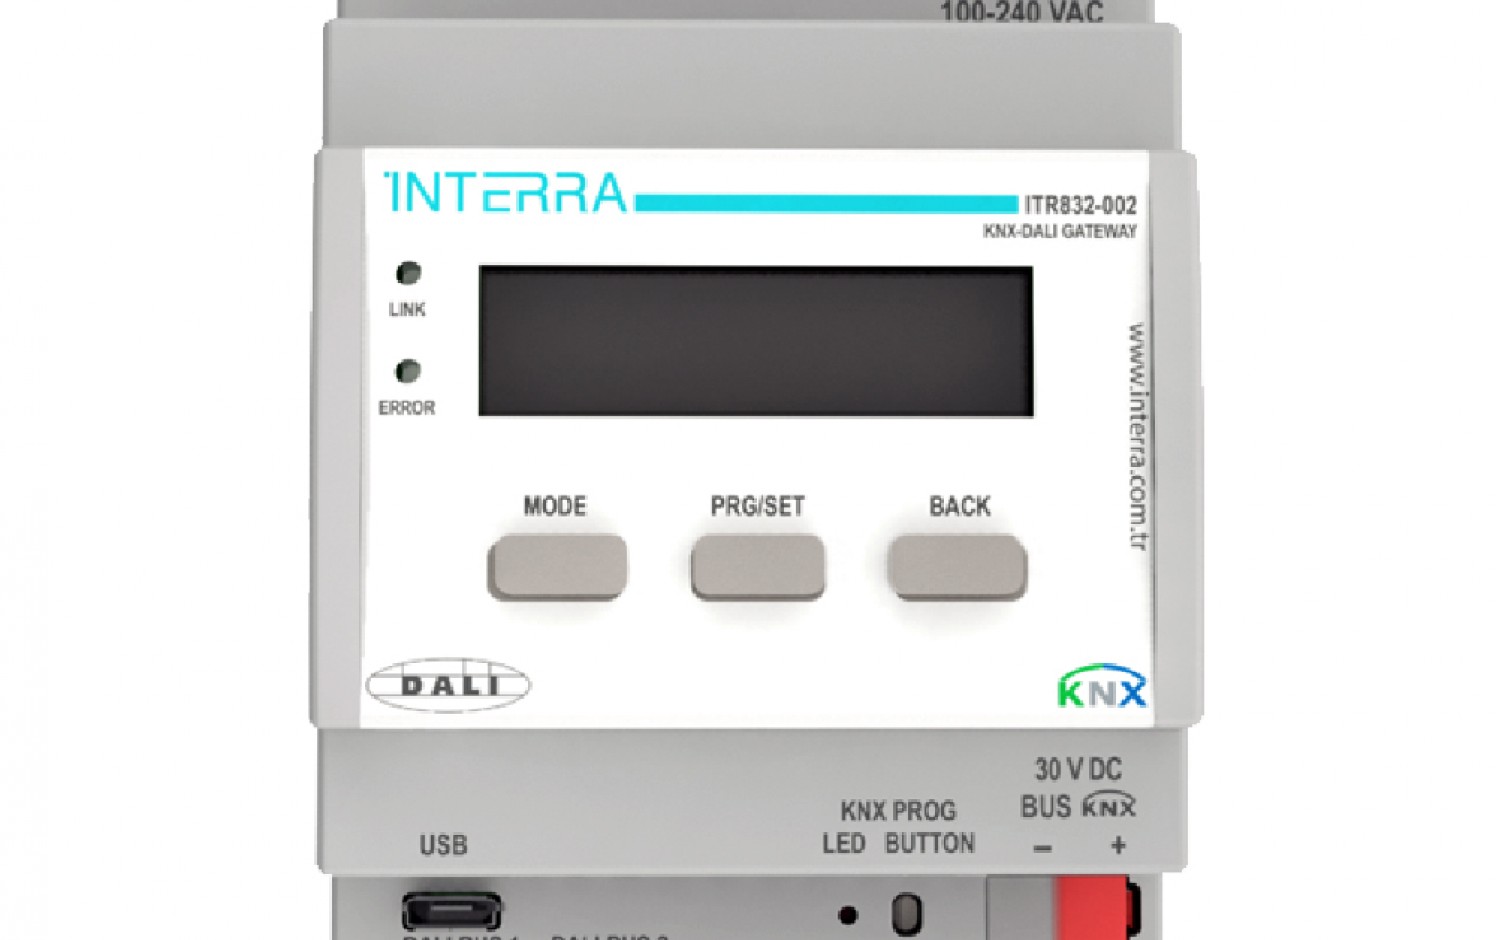 About Interra KNX DALI Gateway (ENG)